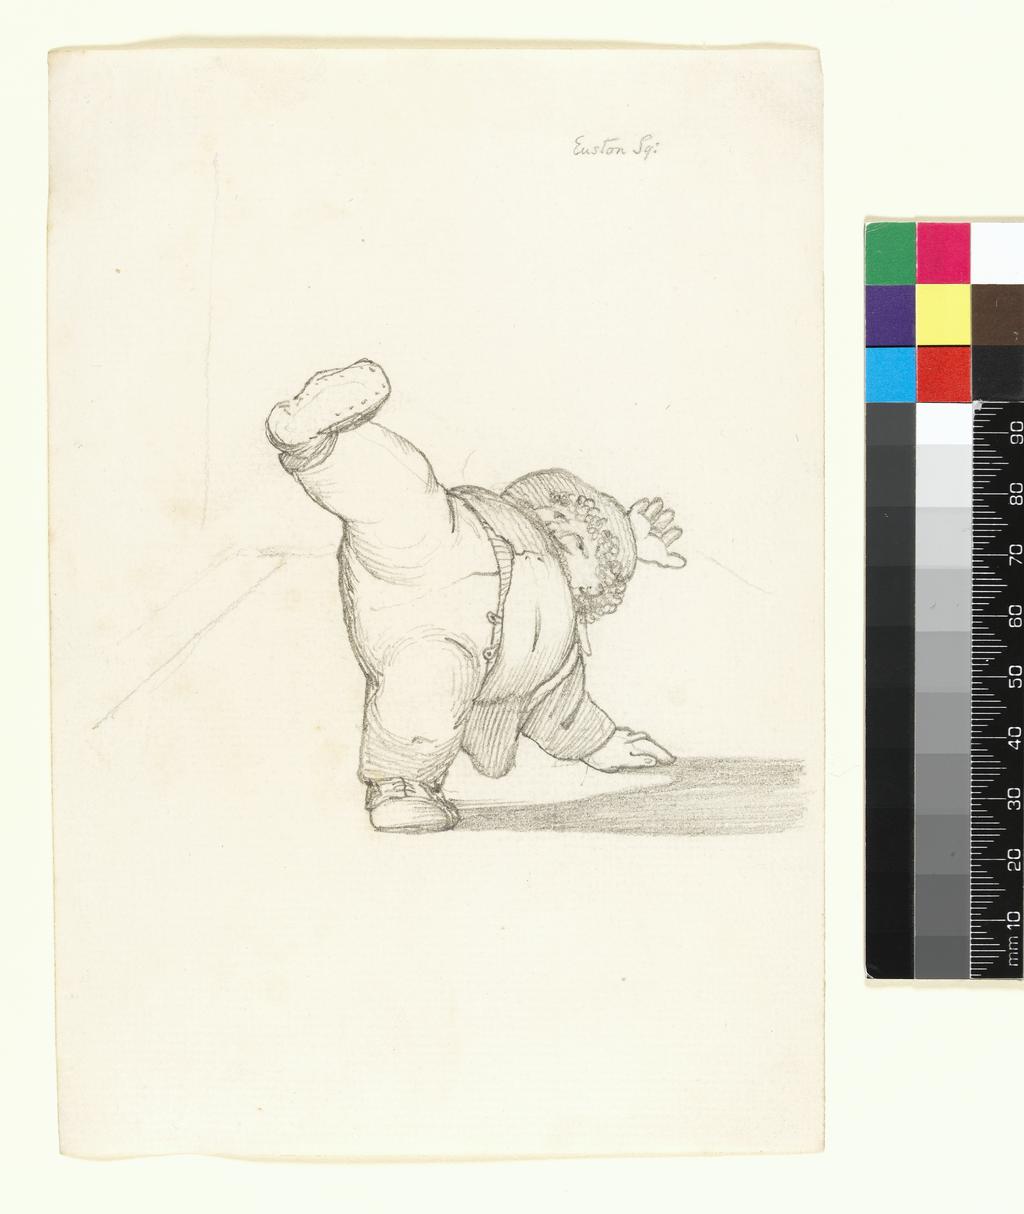 An image of Title/s:  William Morris performing a cartwheel Maker/s: Burne-Jones, Edward (draughtsman) [ULAN info: British artist, 1833-1898]Technique Description:  graphite on laid paperDimensions: height: 181 mm, width: 128 mm 